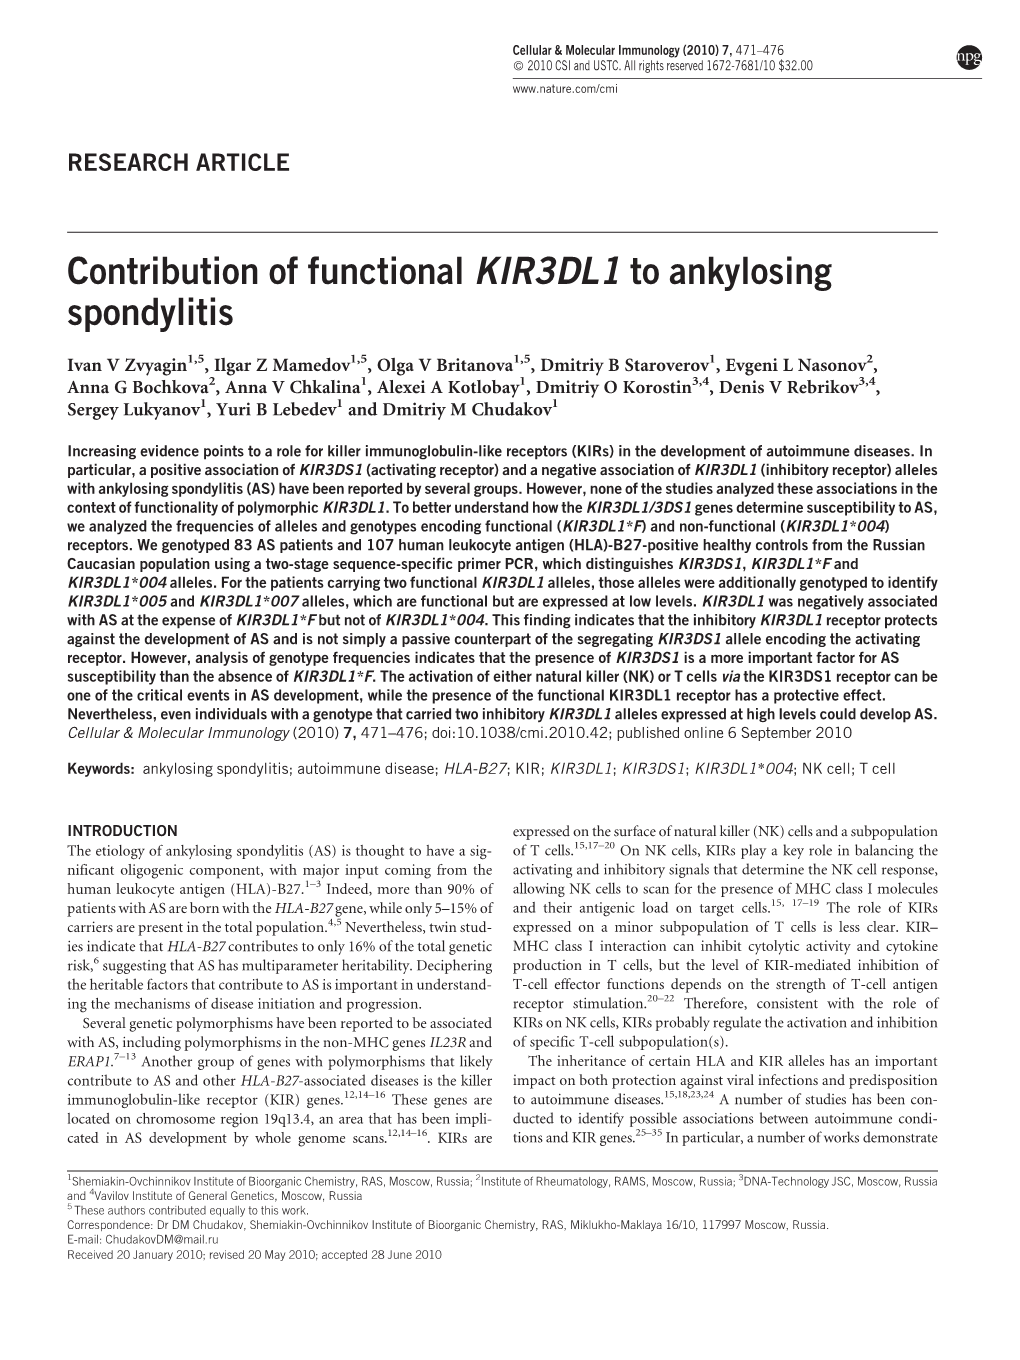 Contribution of Functional KIR3DL1 to Ankylosing Spondylitis